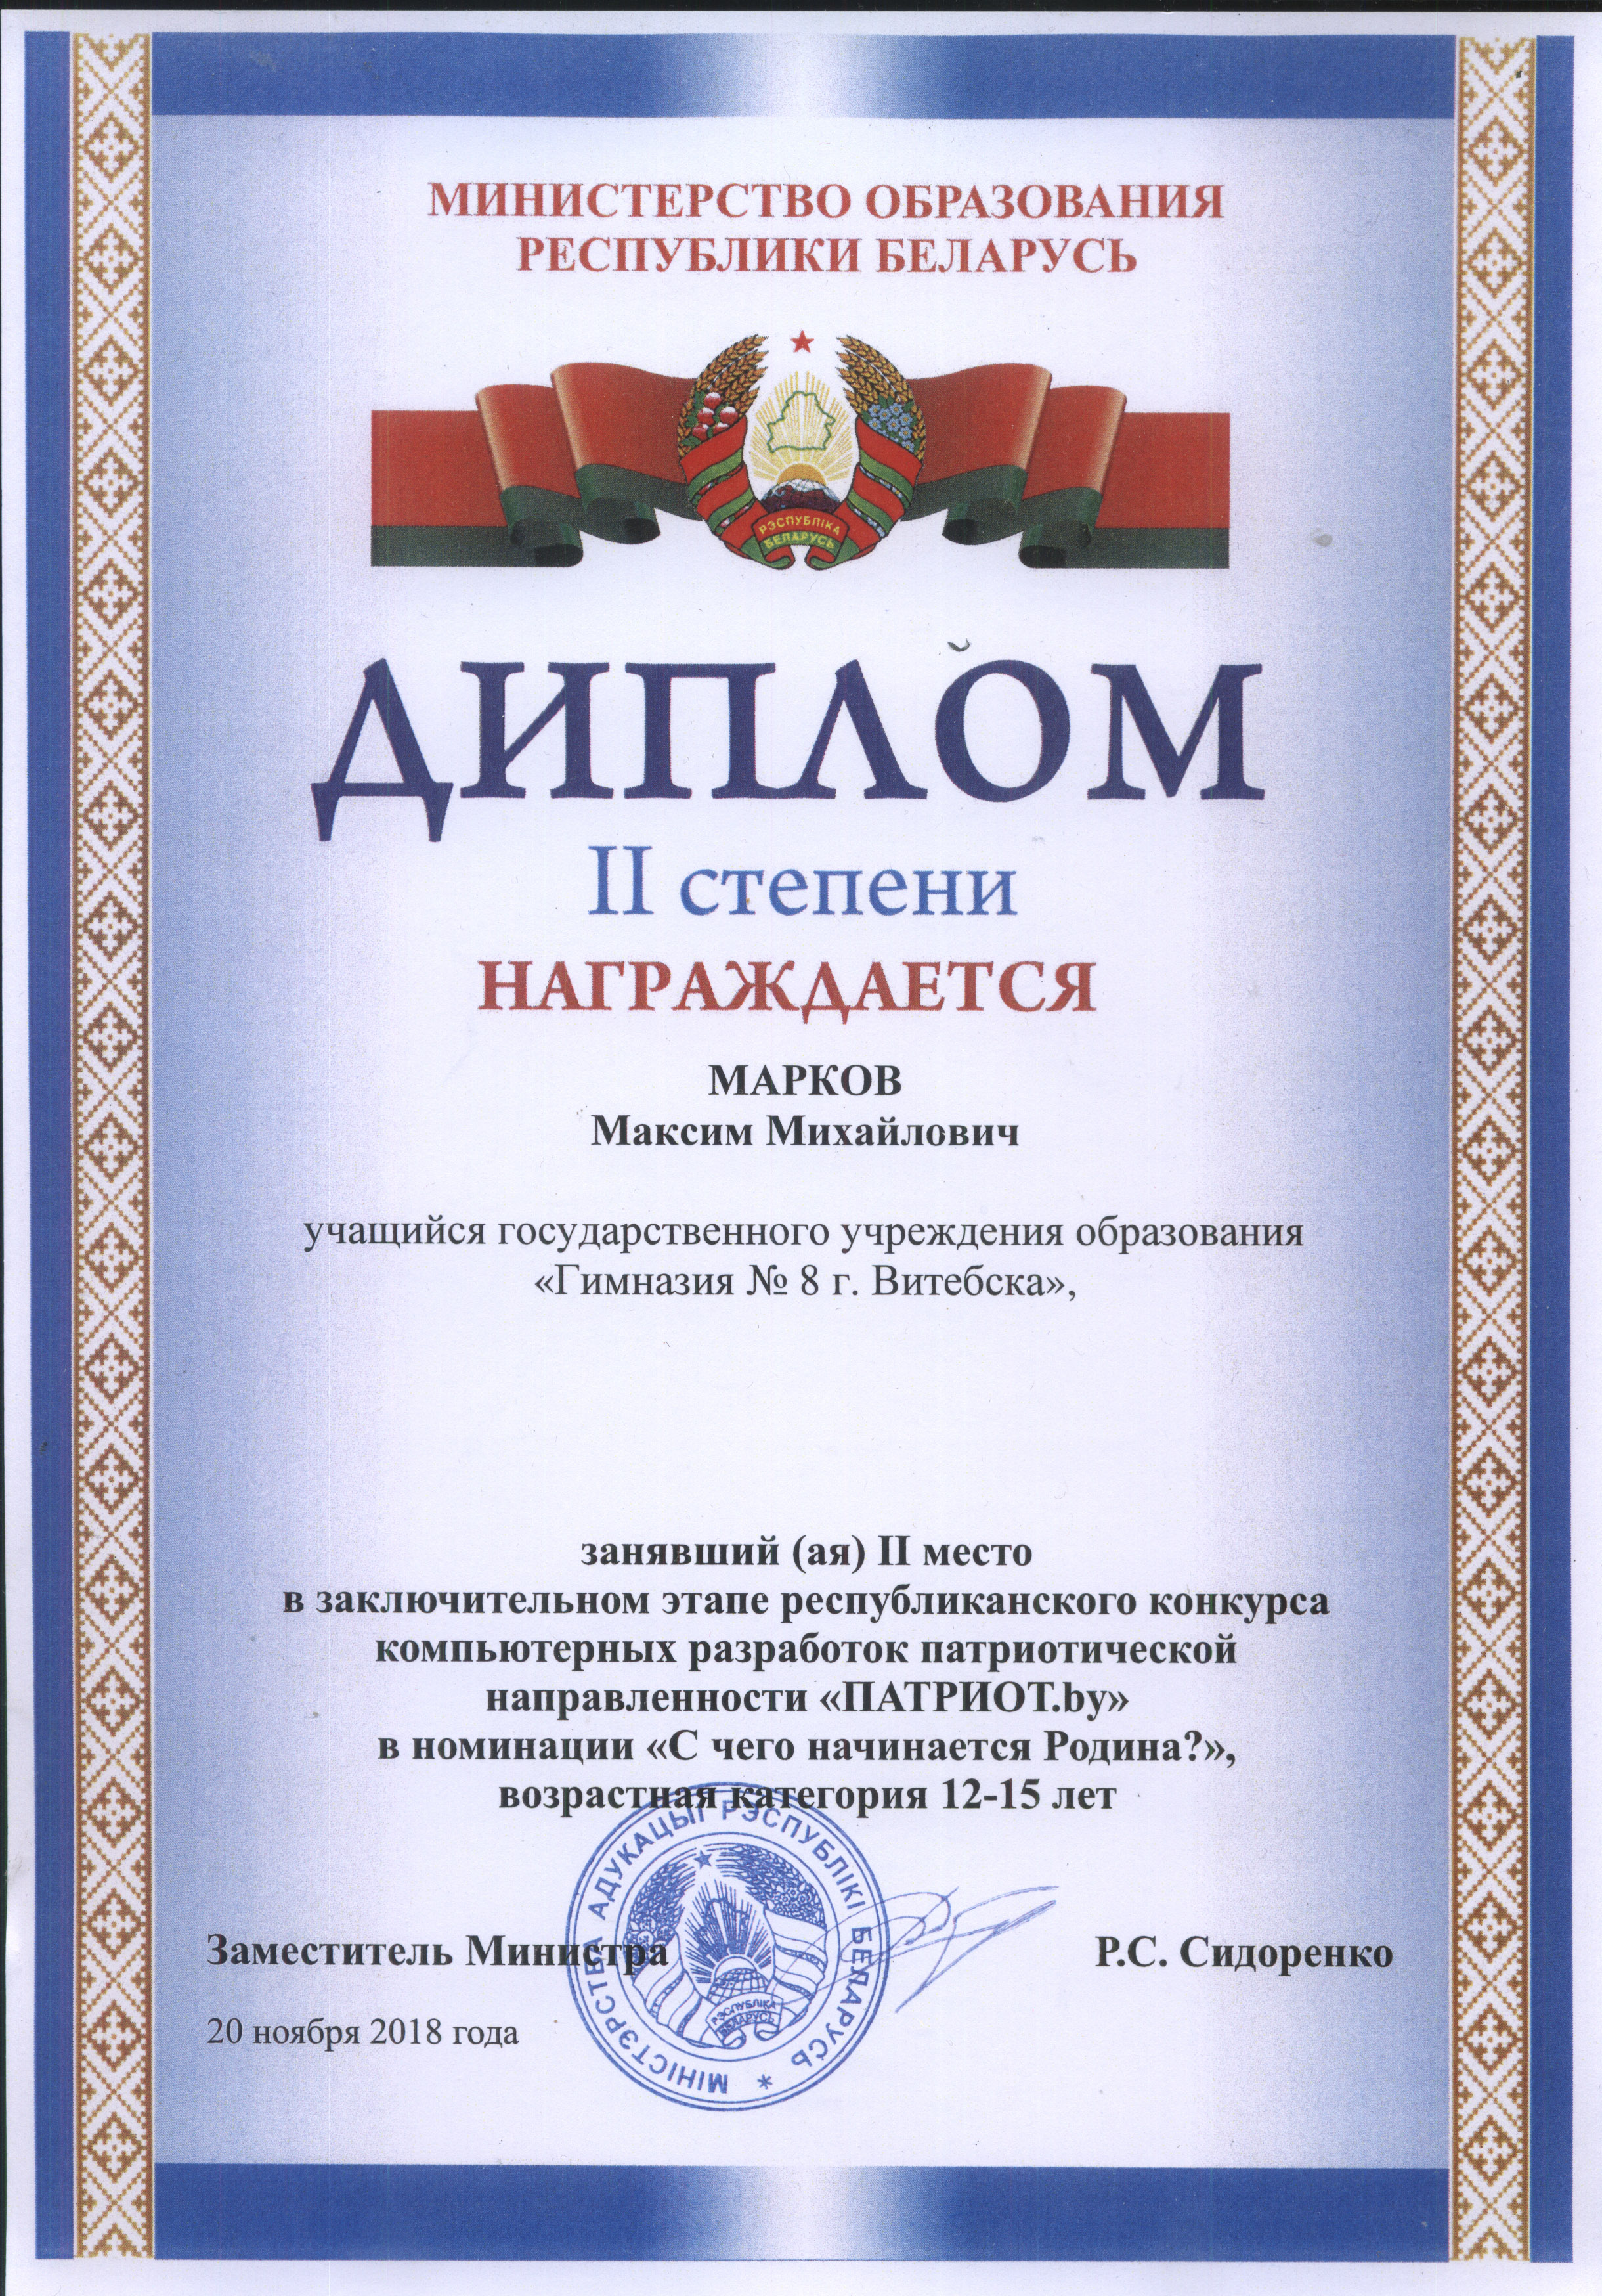 Diplom Markov Patriot pesp 2018